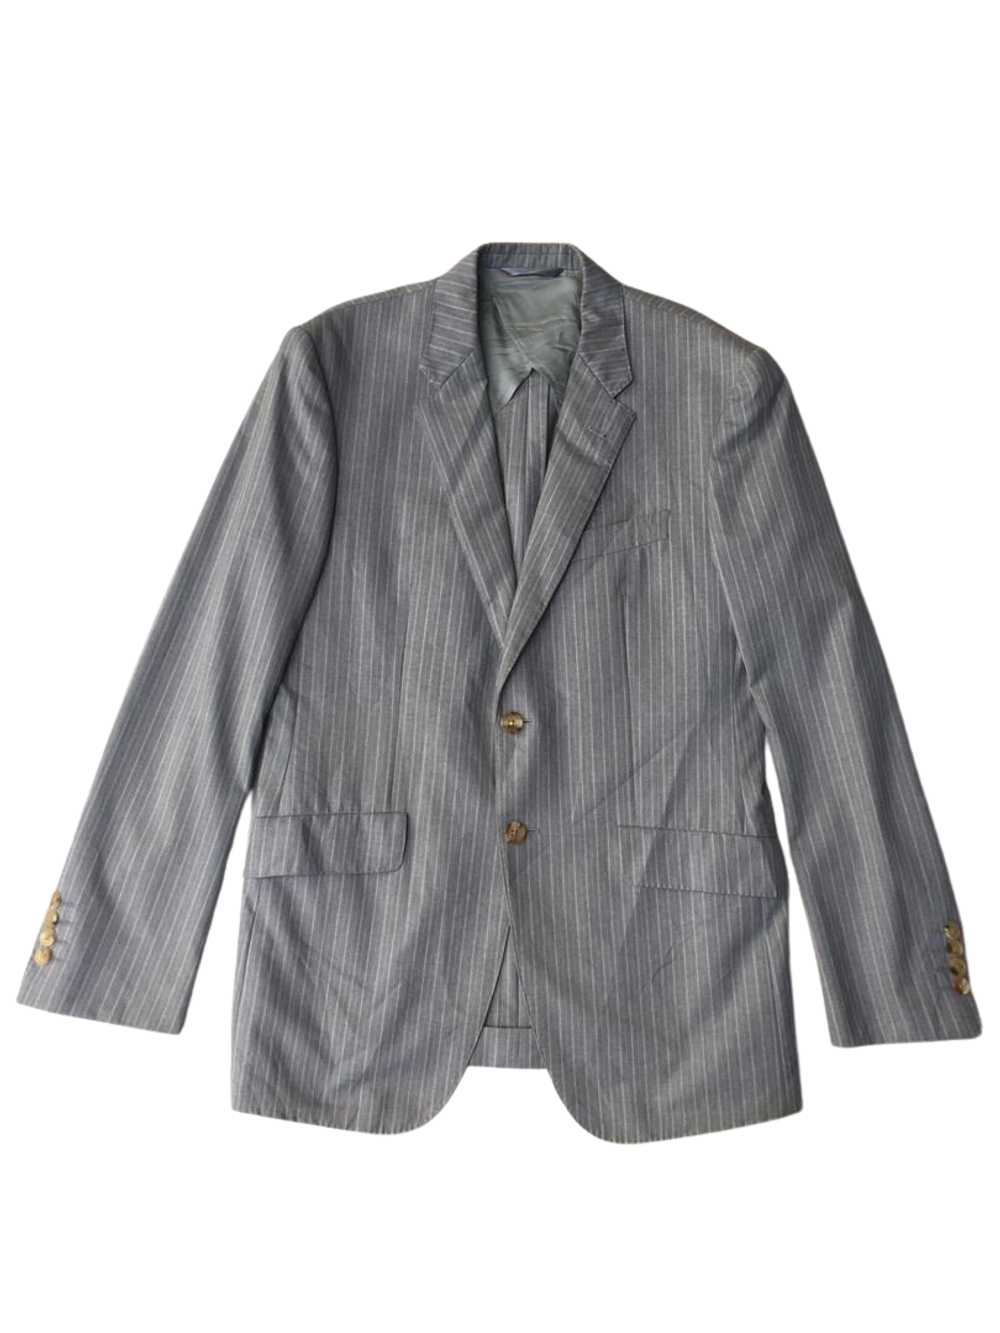 Paul Smith London Gray Stripe Wool Blazer Coat - image 1